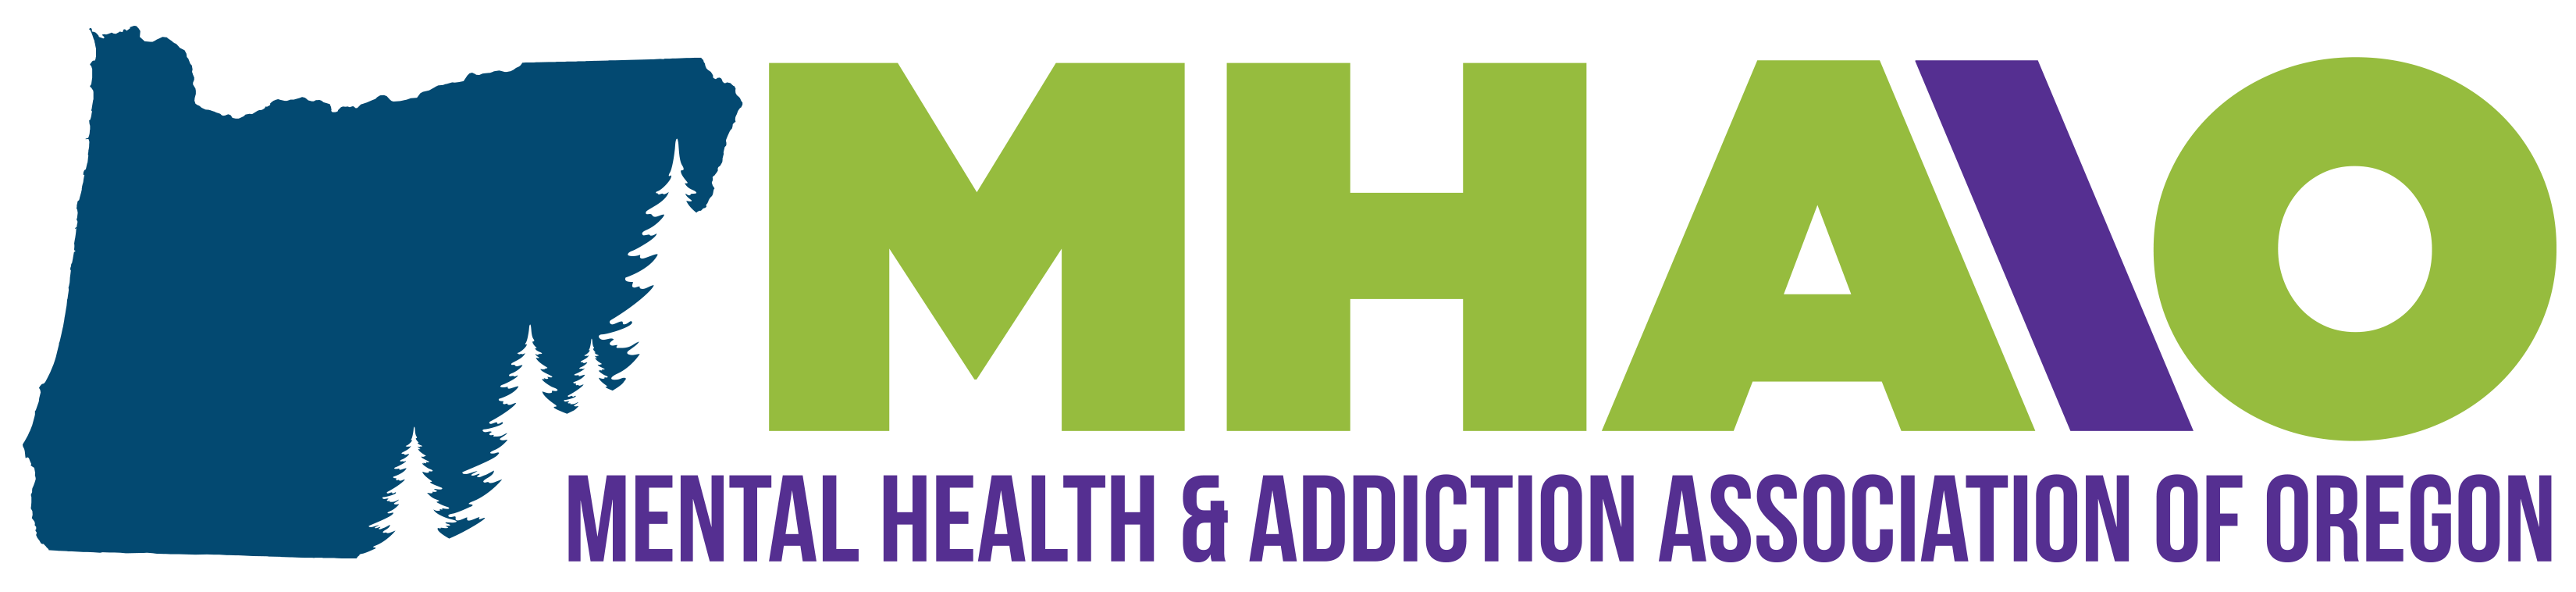 Mental Health & Addiction Association of Oregon logo